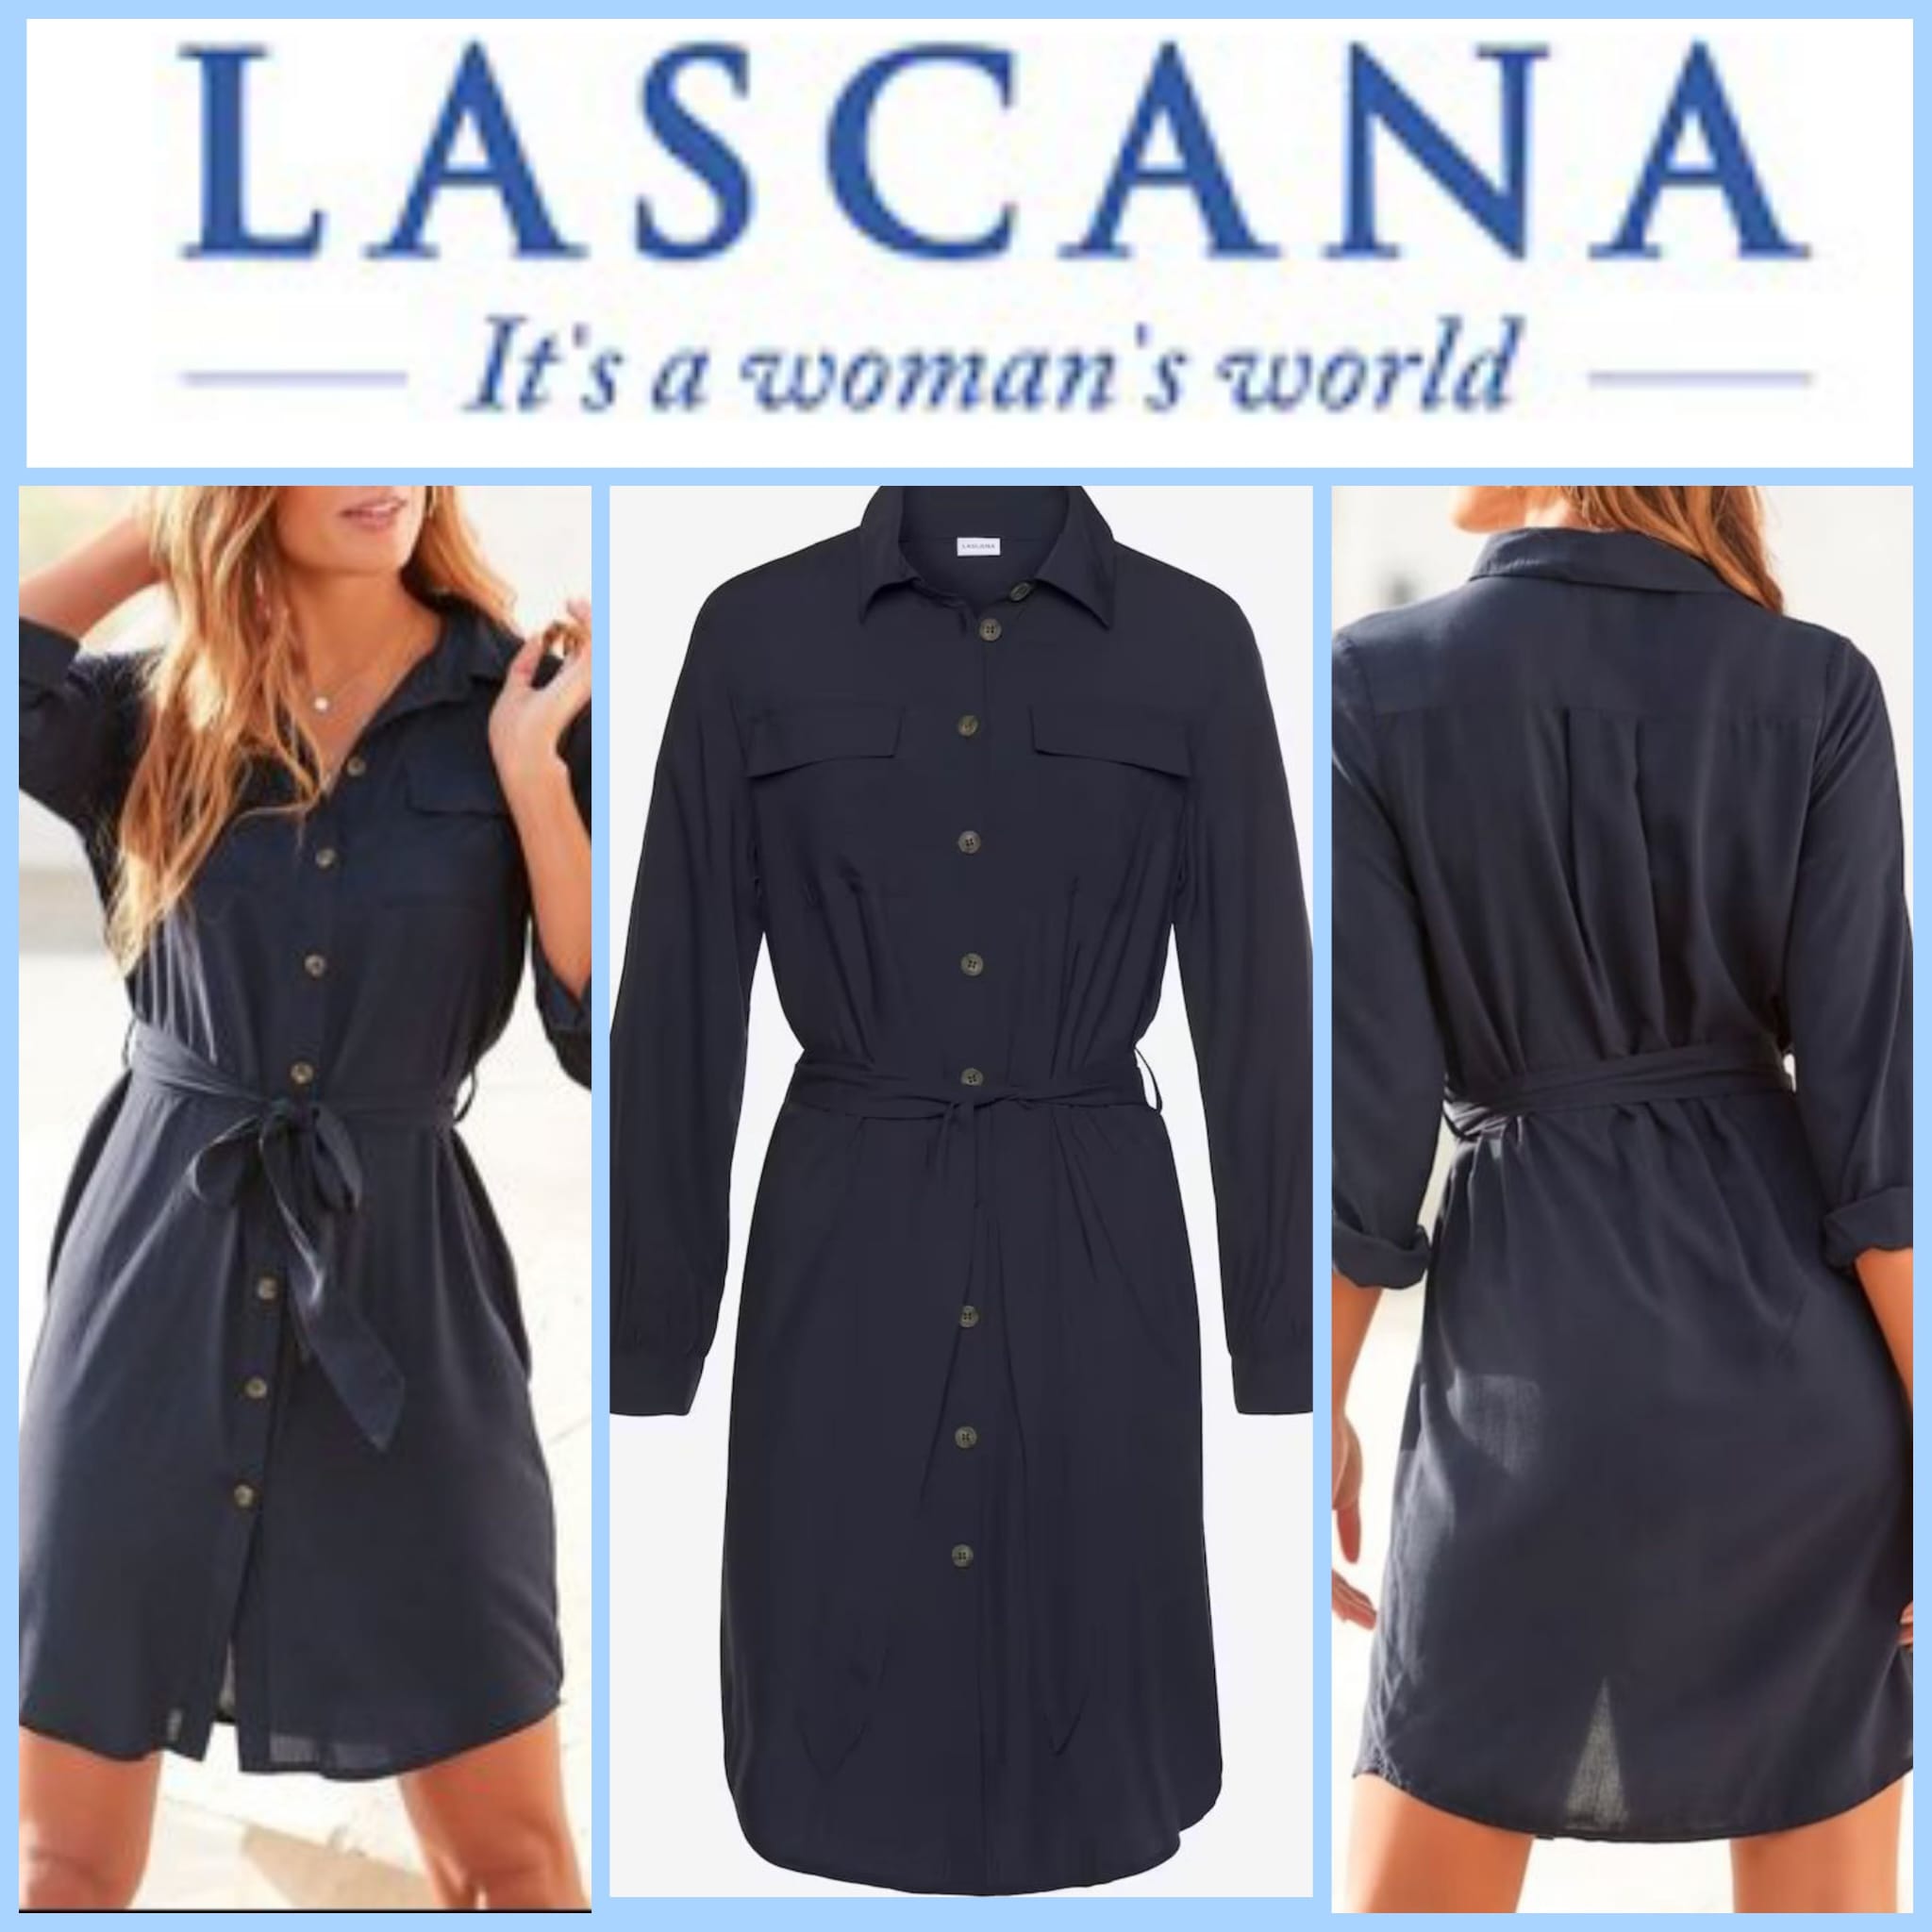 Women's shirt dresses from Lascana